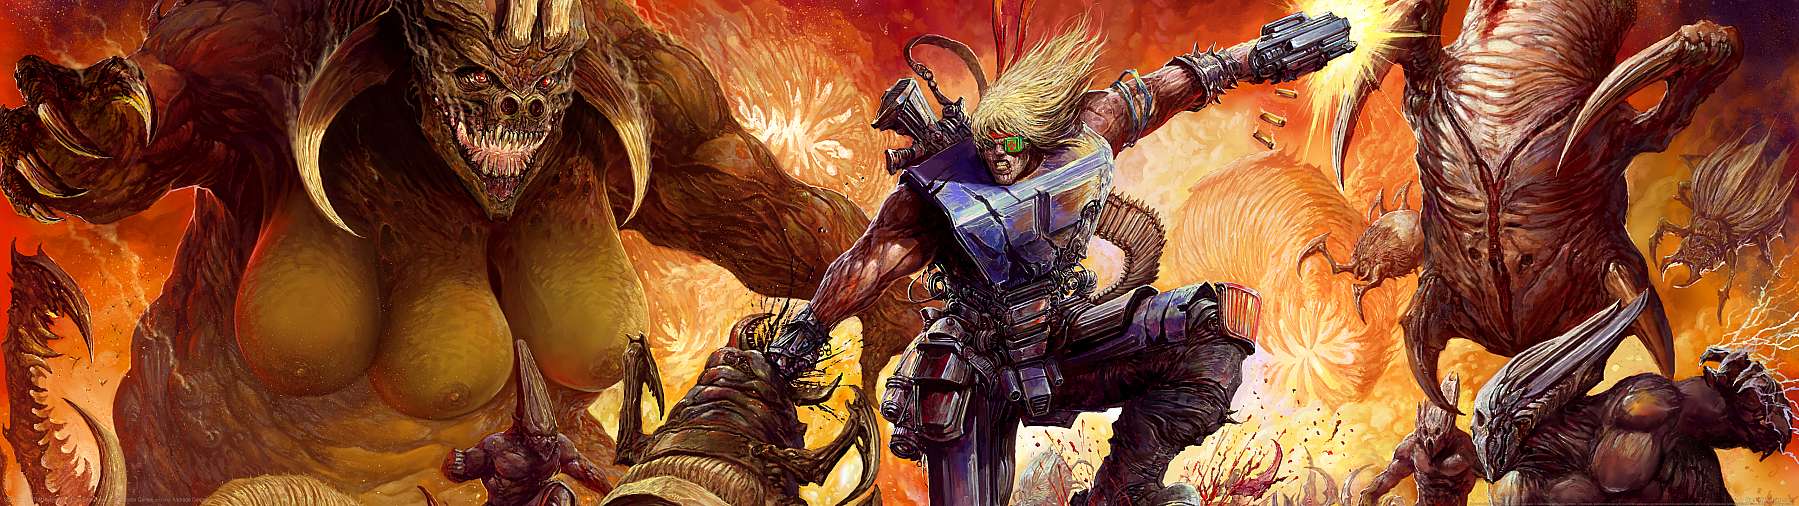 SturmFront - The Mutant War: Ubel Edition superwide achtergrond 01